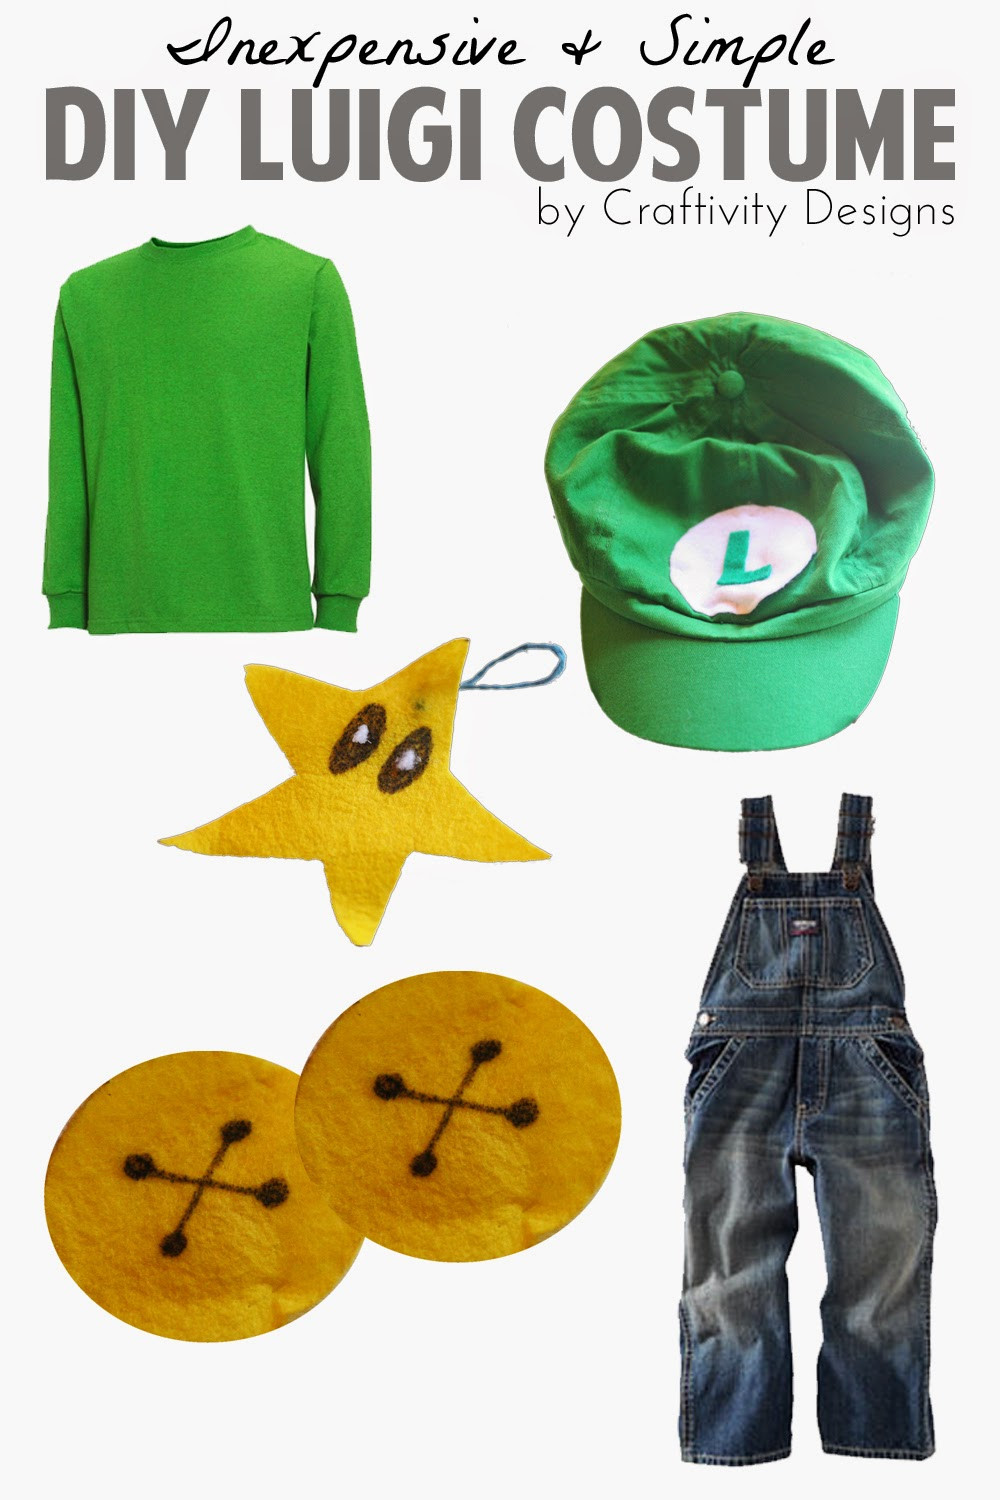 Best ideas about Luigi Costume DIY
. Save or Pin Craftivity Designs DIY Luigi Costume Simple & Inexpensive Now.